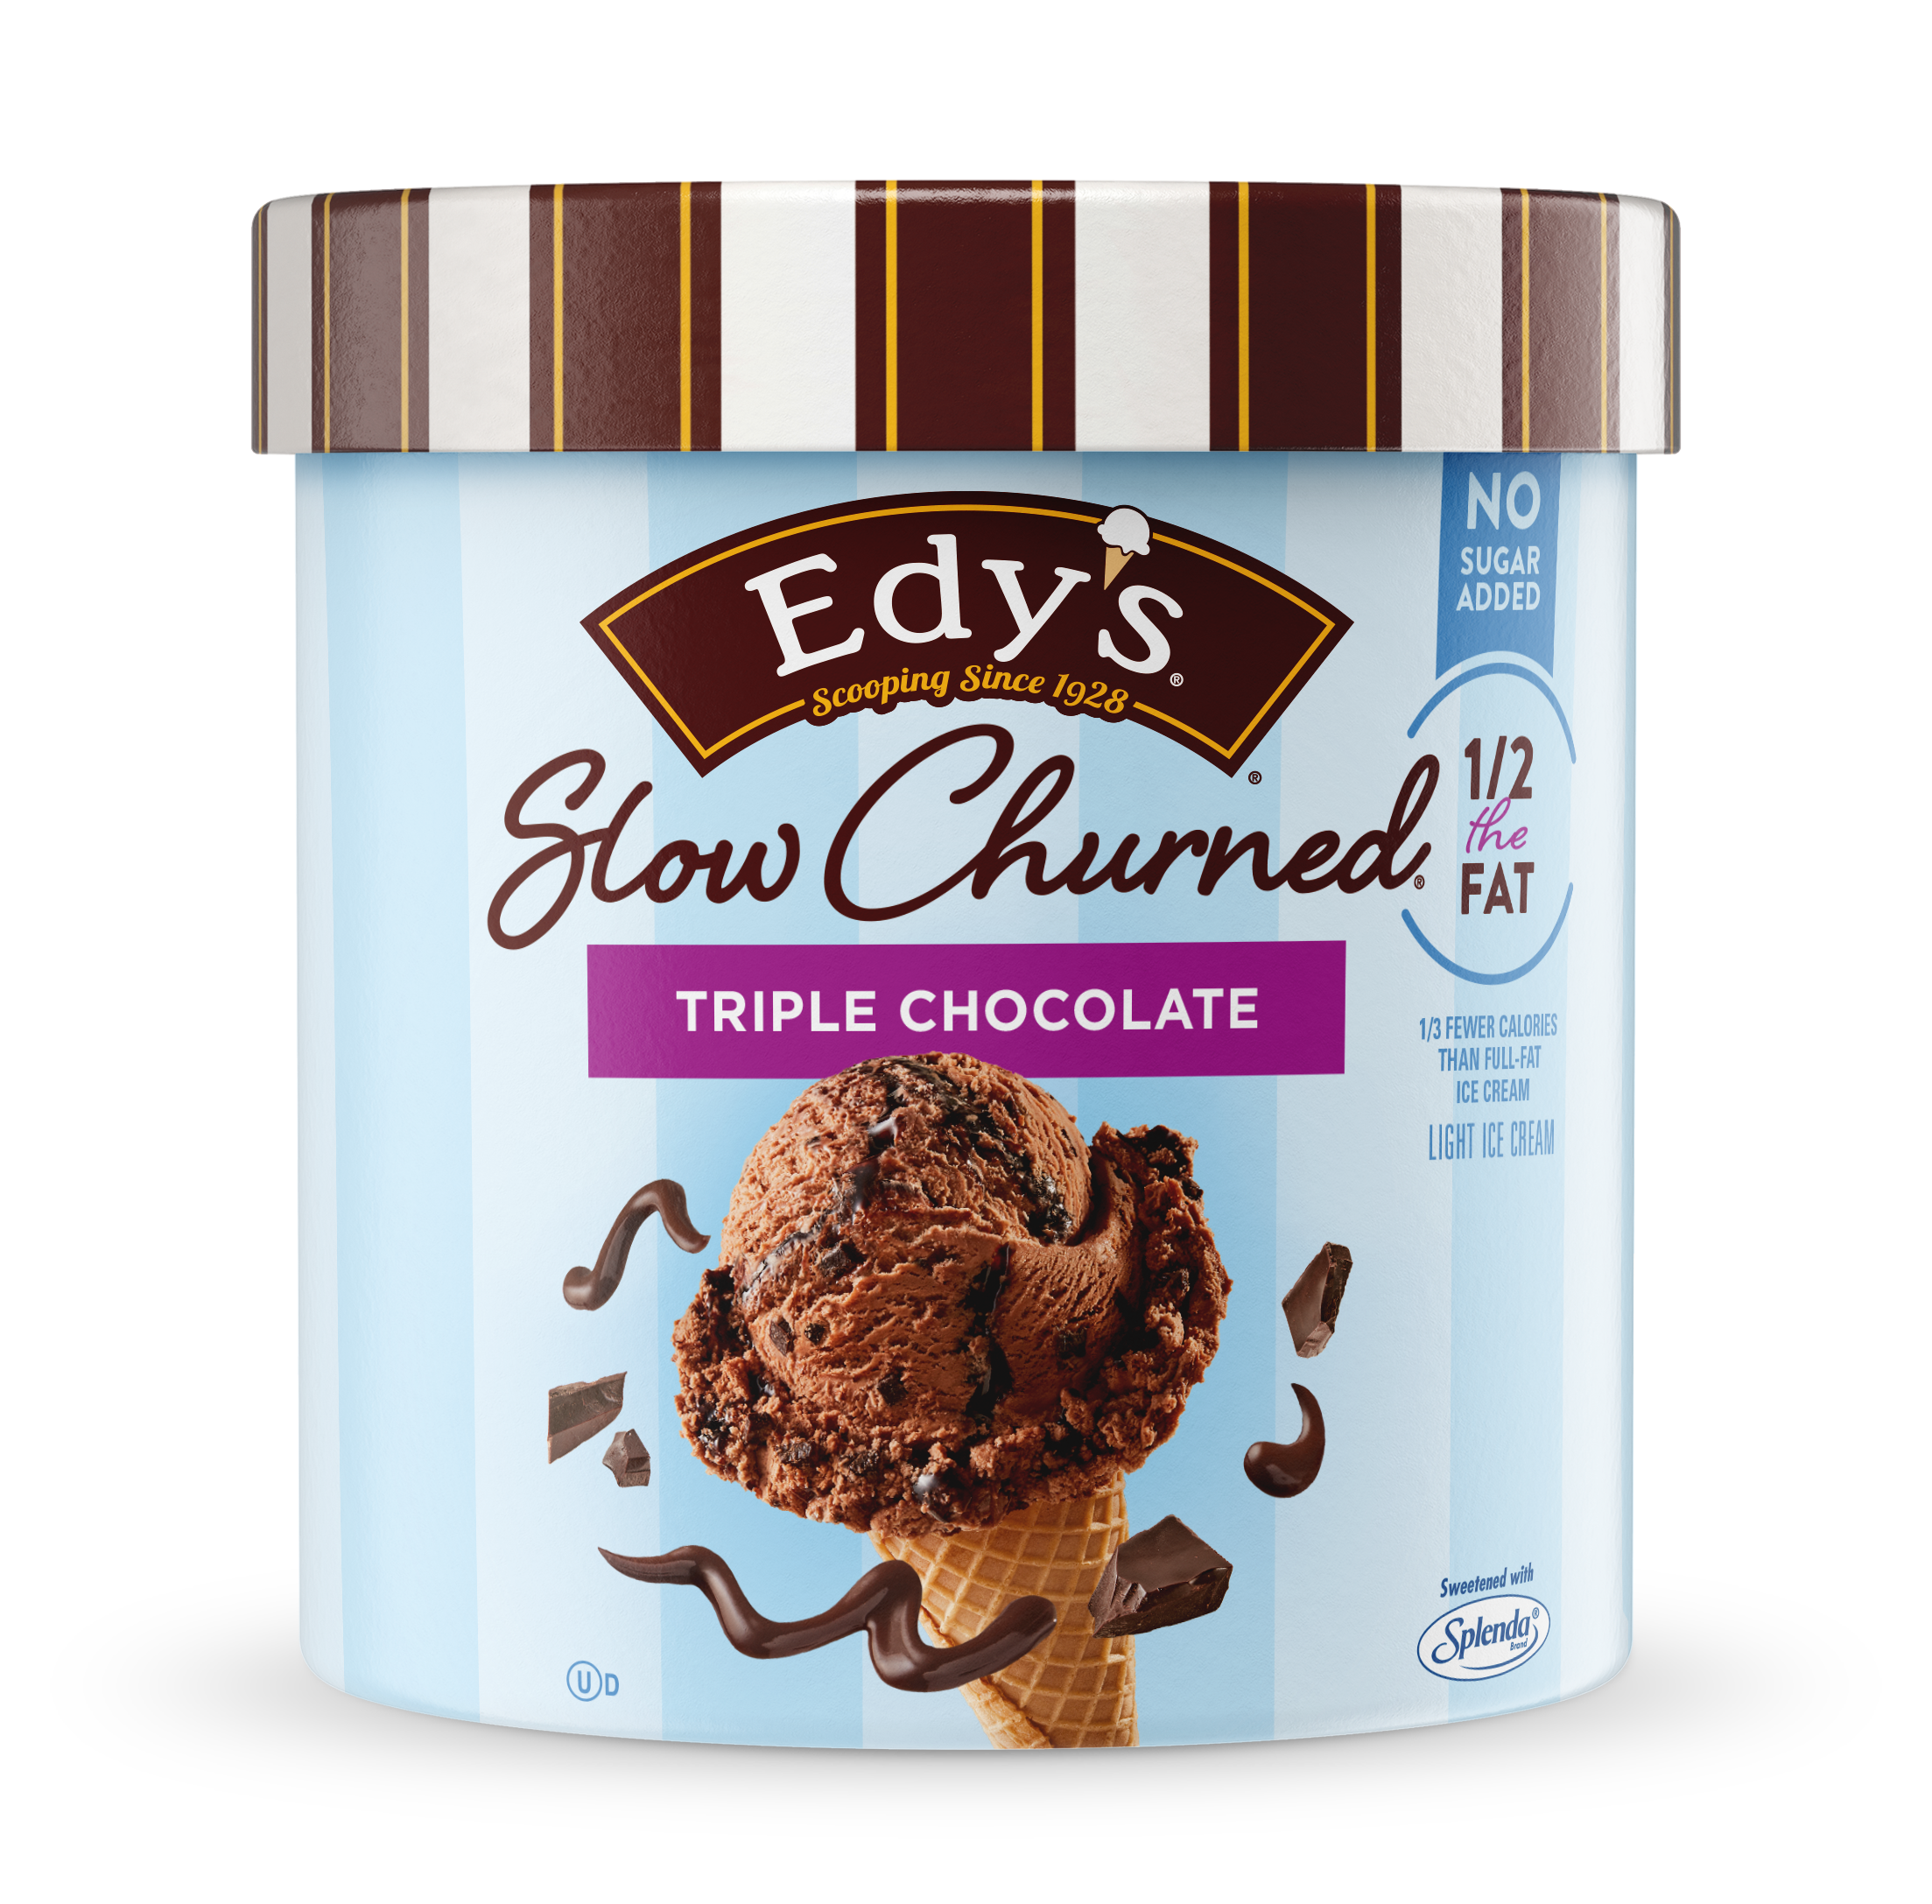 Carton of Edy's show churned triple chocolate ice cream